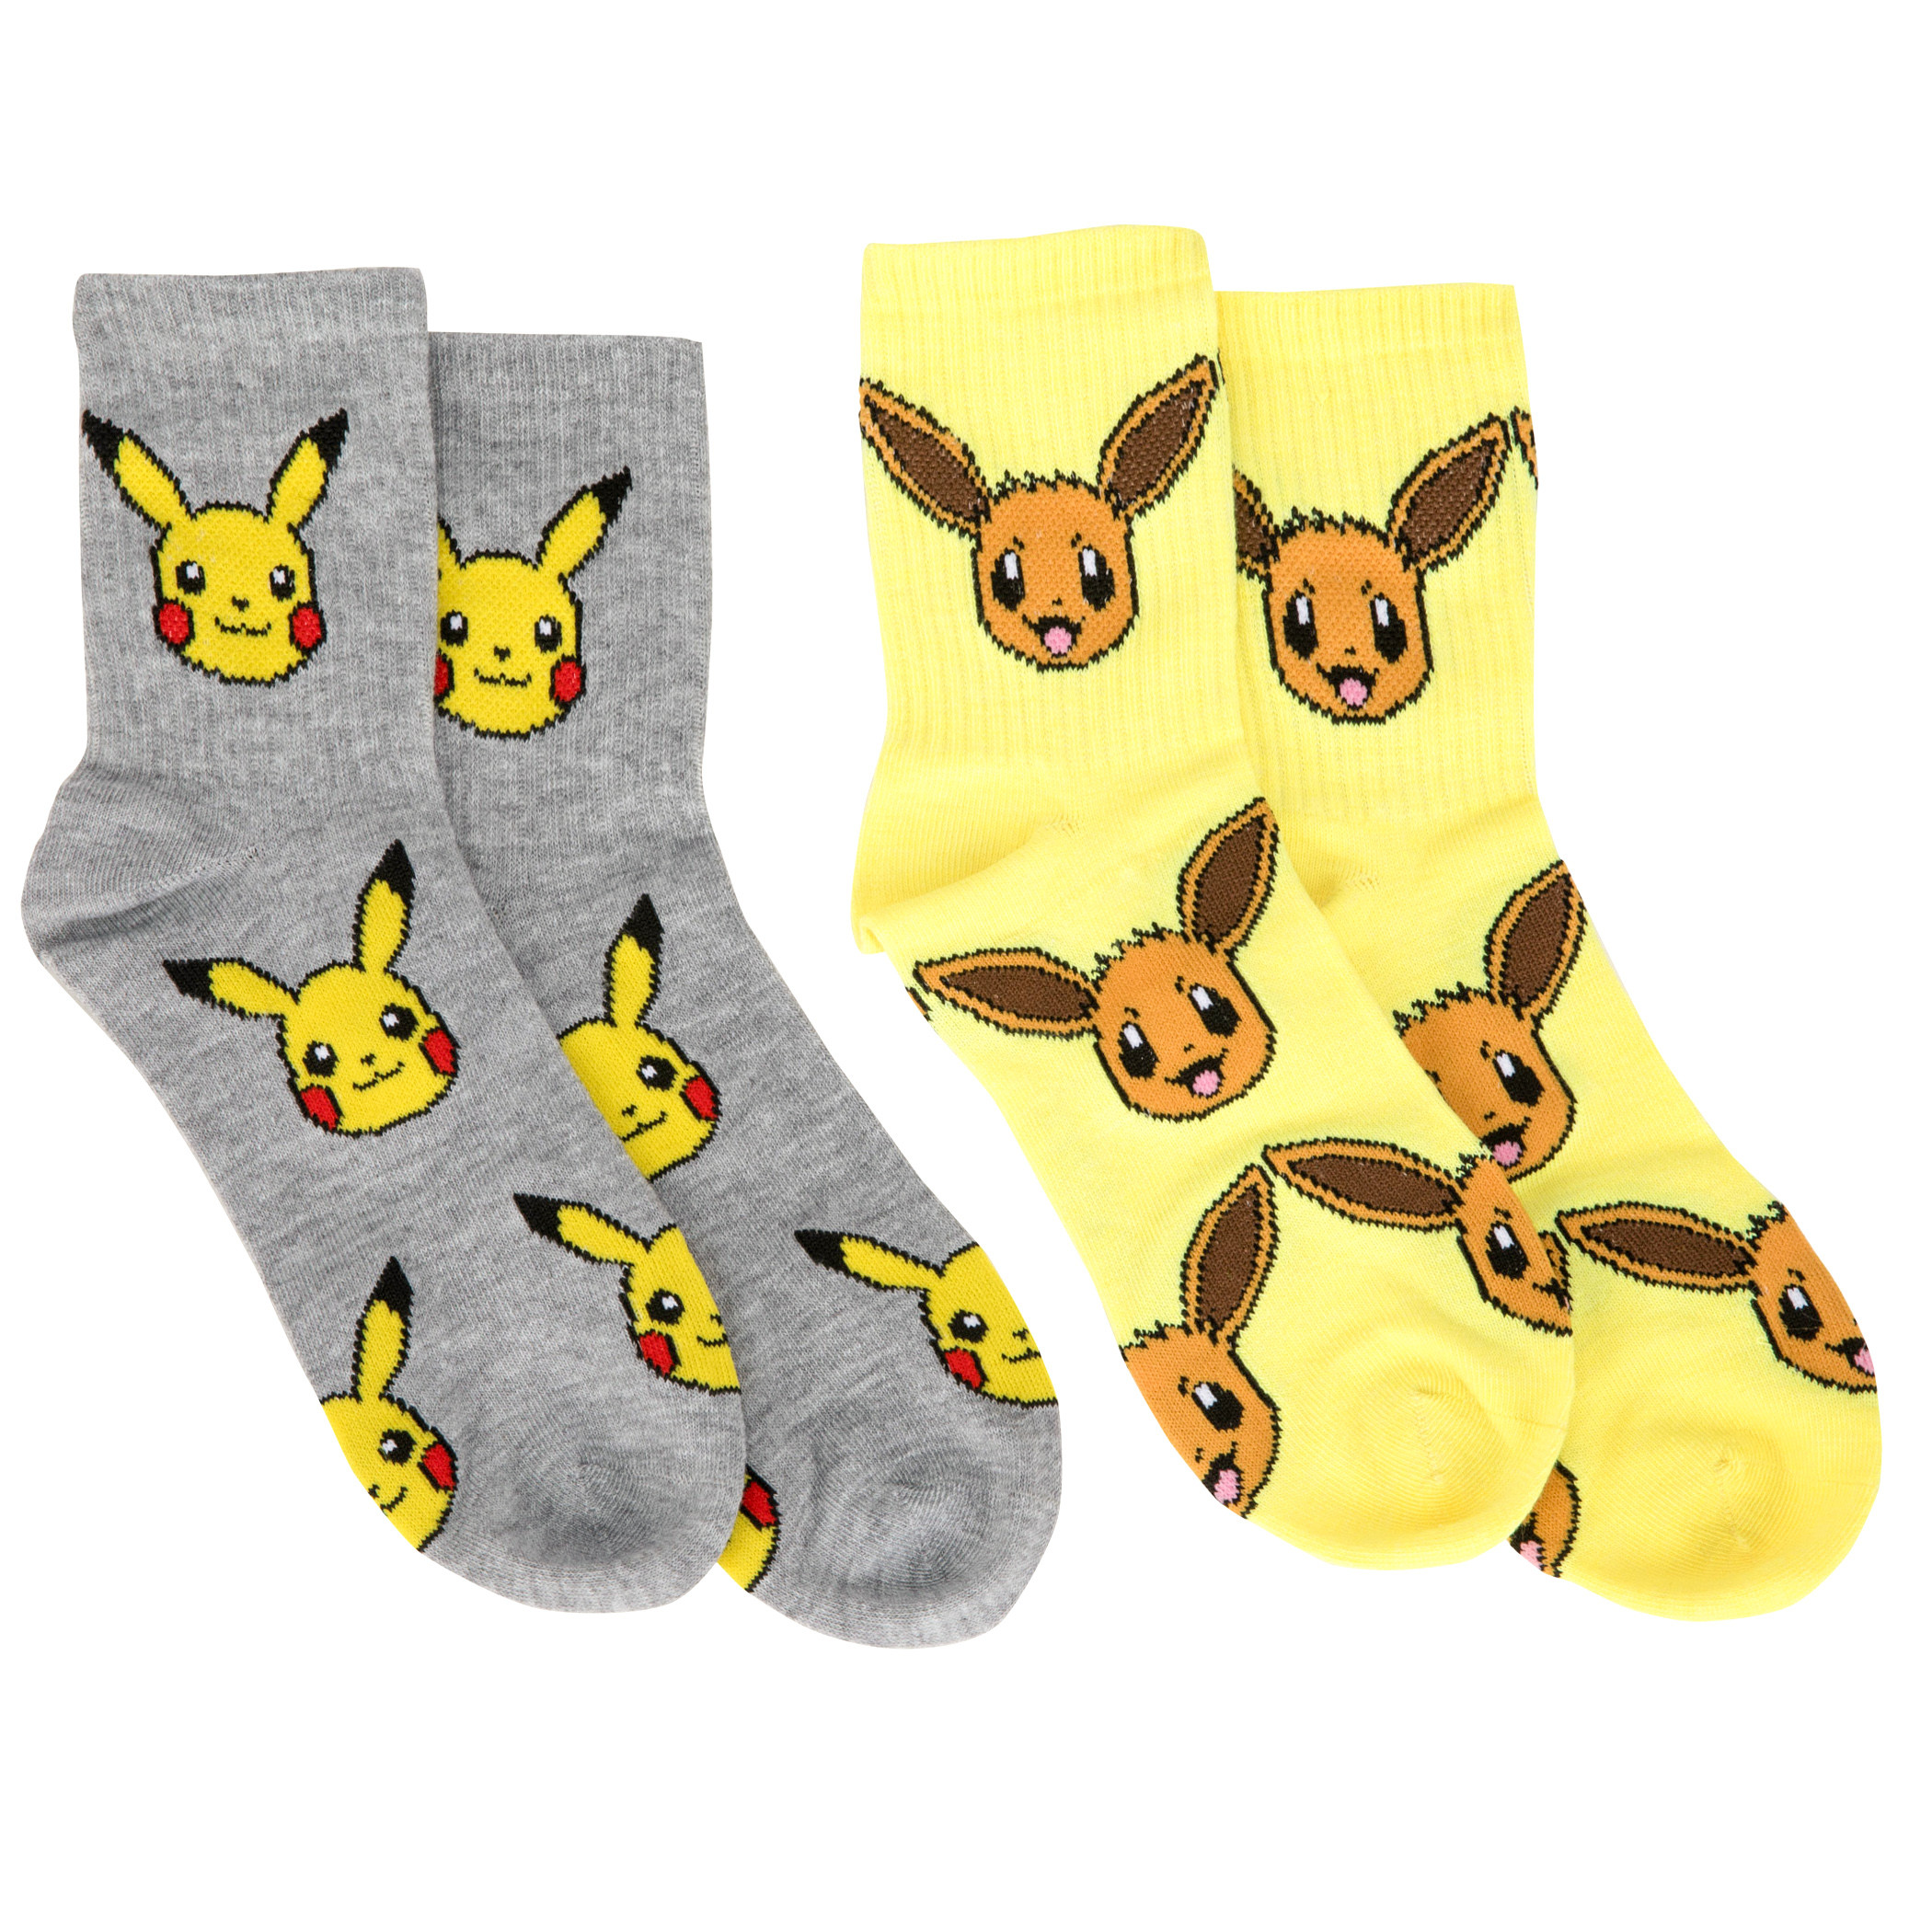 Pokemon Pikachu and Eevee Women's Crew Socks 2-Pack